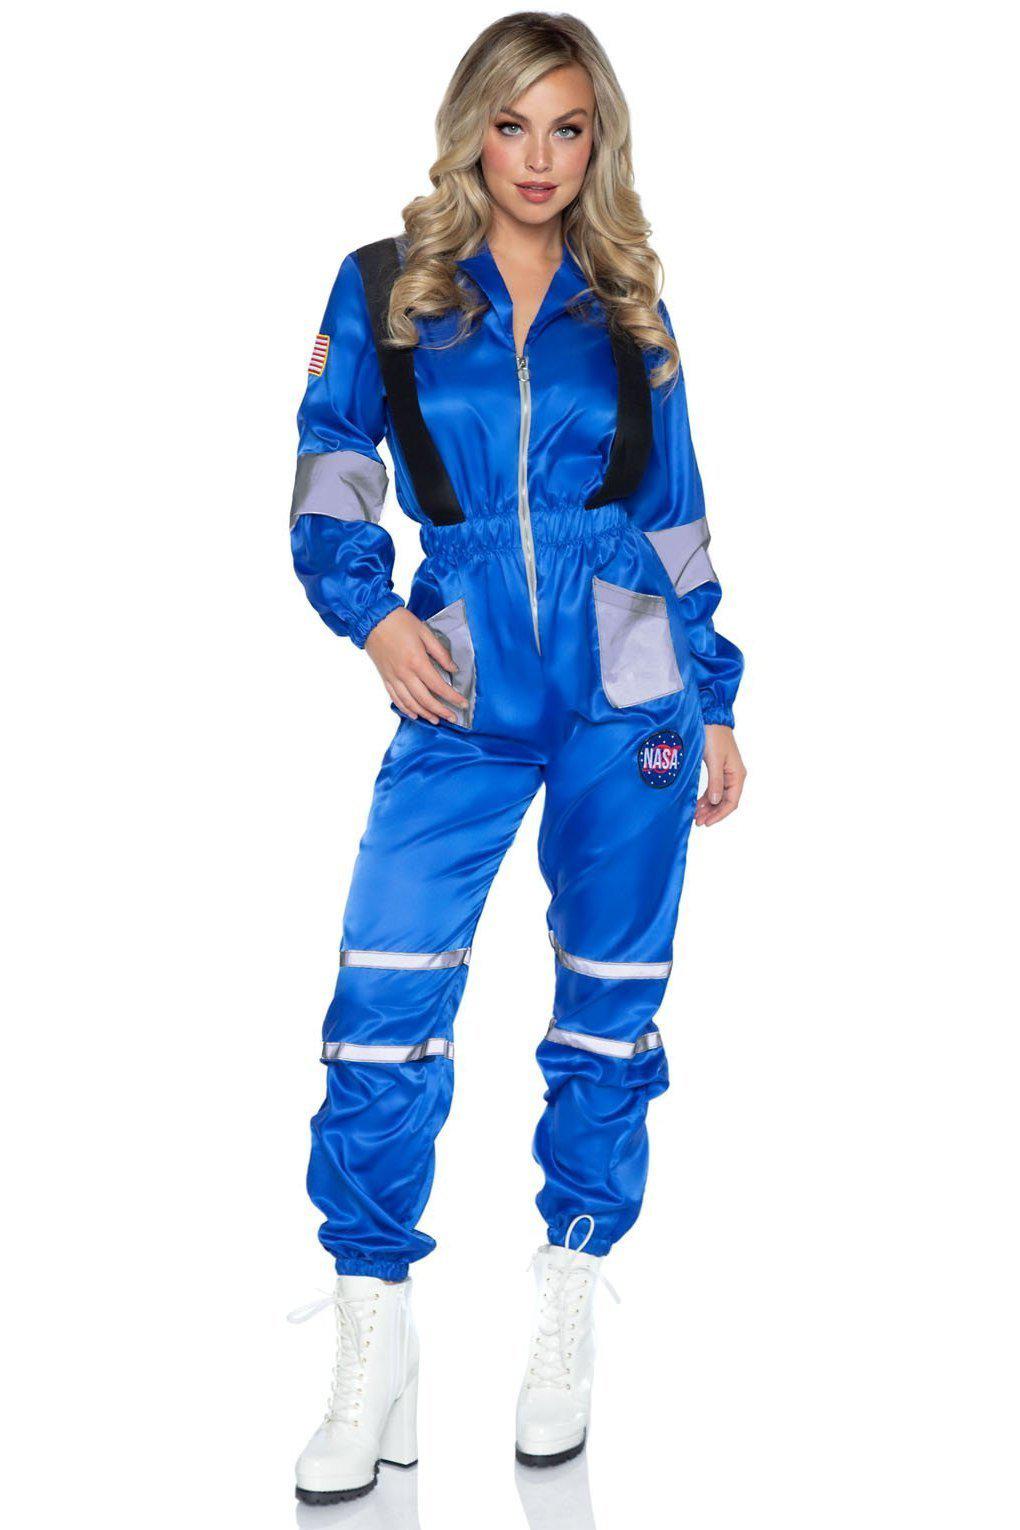 Space Explorer Costume-Space Costumes-Leg Avenue-SEXYSHOES.COM